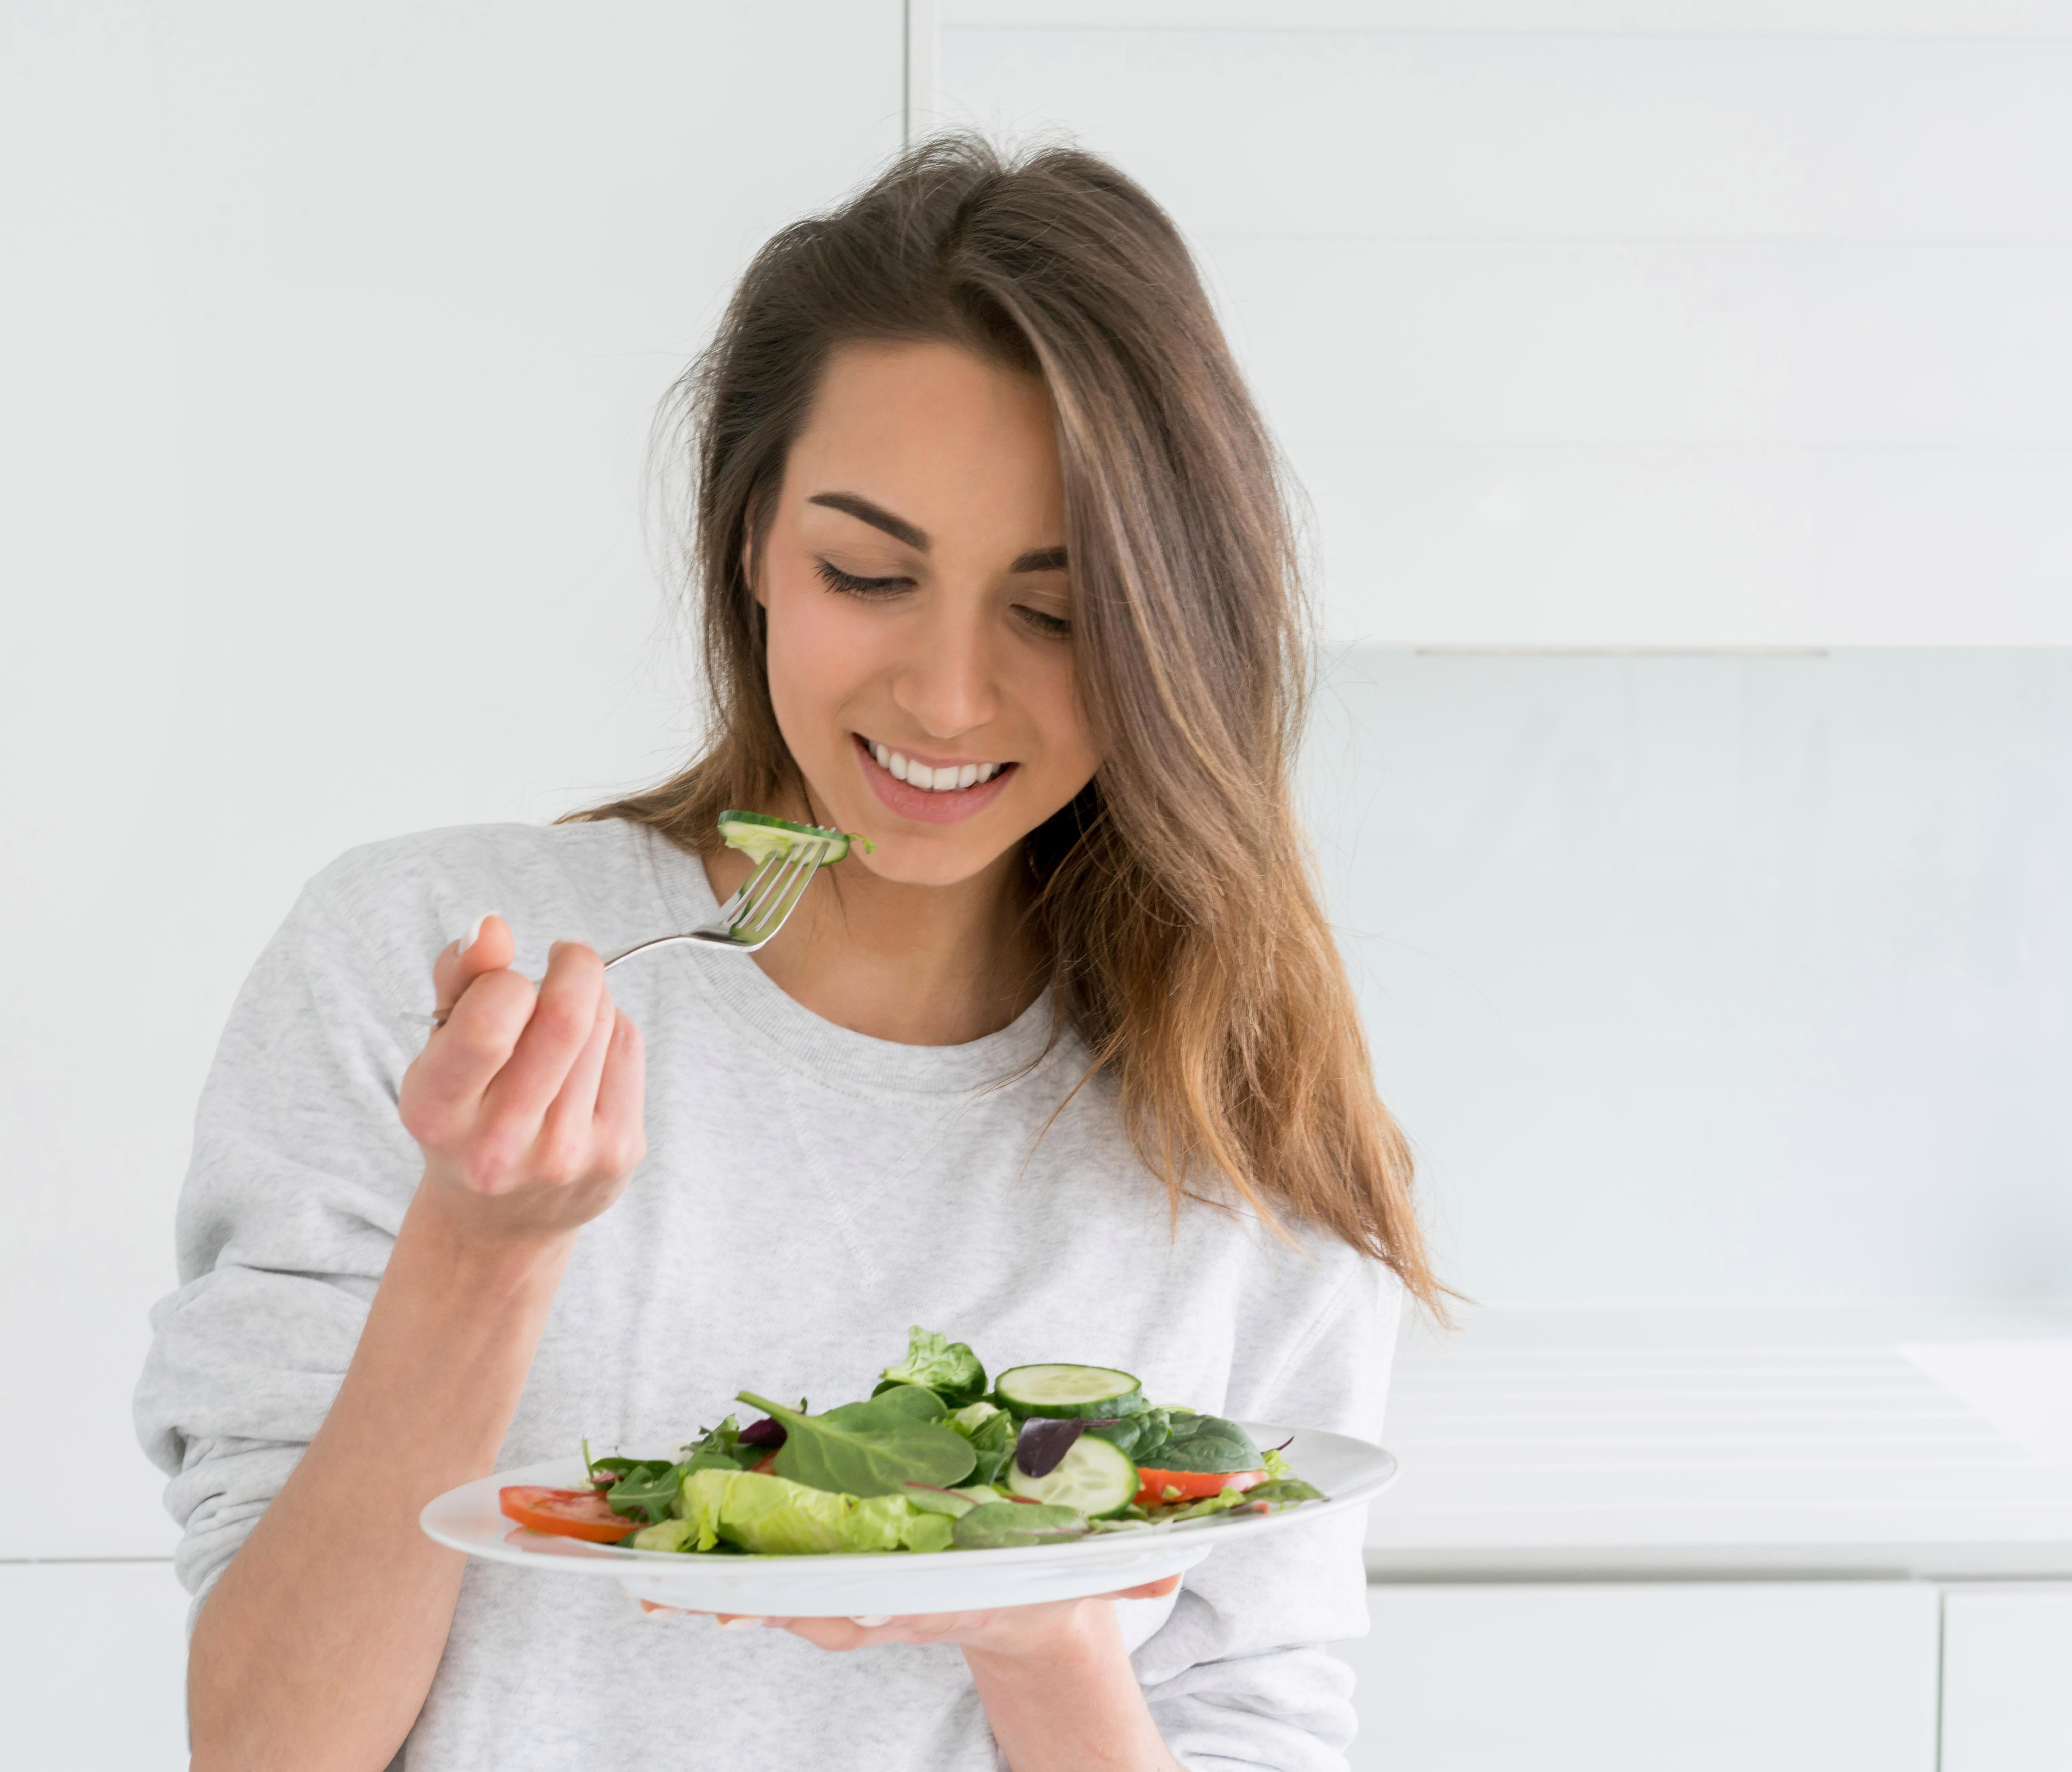 Неприятного аппетита. Девушка ест салат. Девушка с салатом. Здоровое питание девушка.